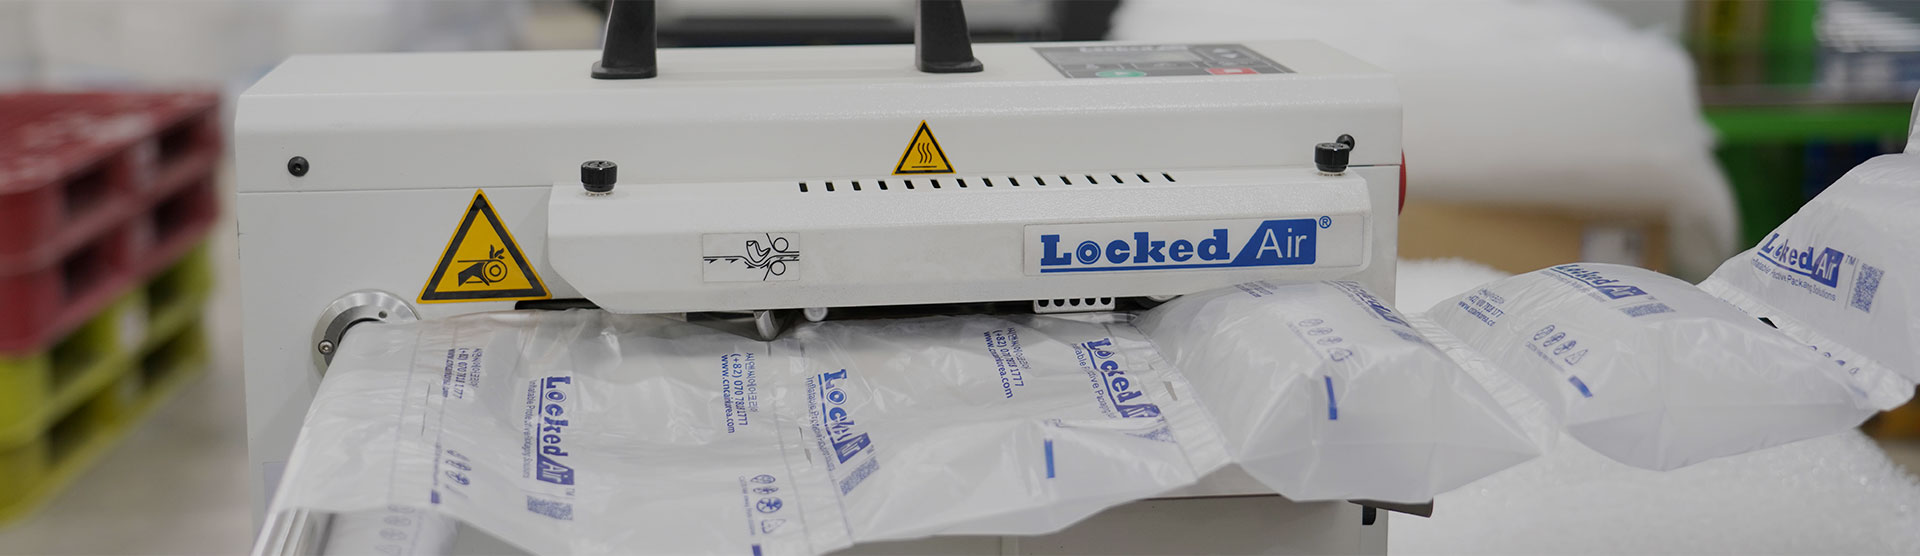 LockedAir LT9002 Air Cushion System Manual Lifter